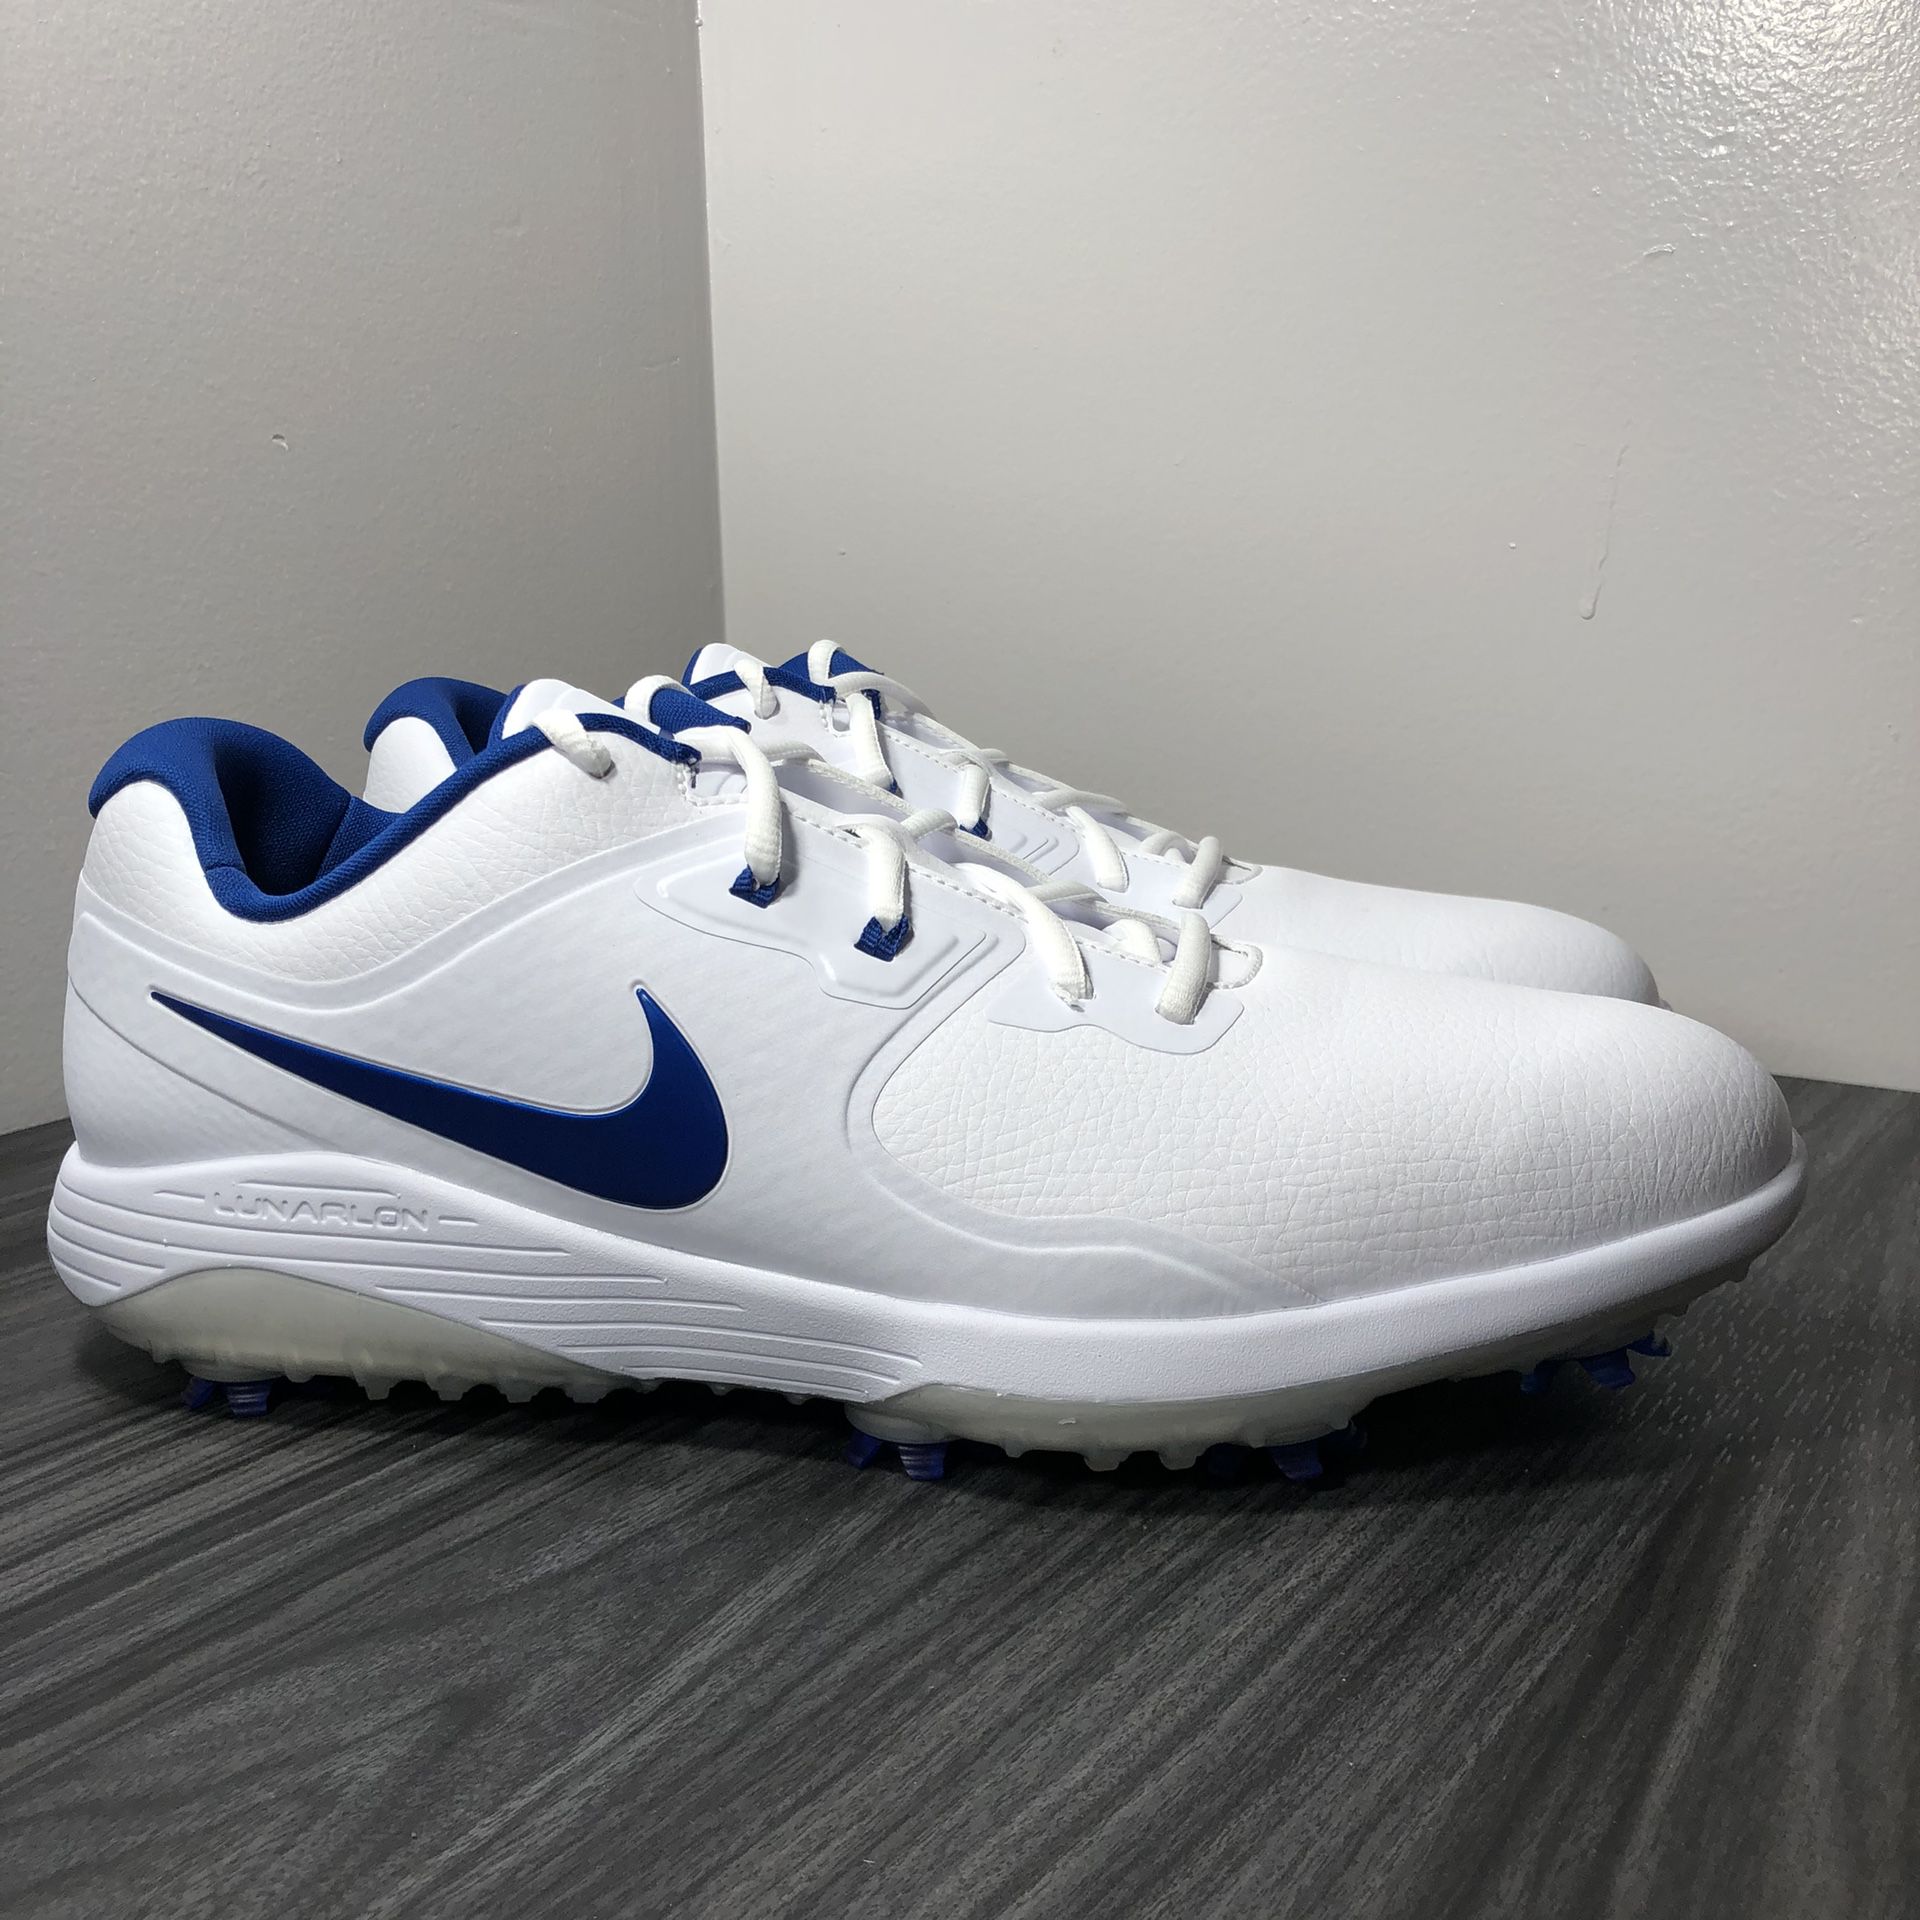 Nike Men's Vapor Pro Golf Shoes White/Indigo Force Blue